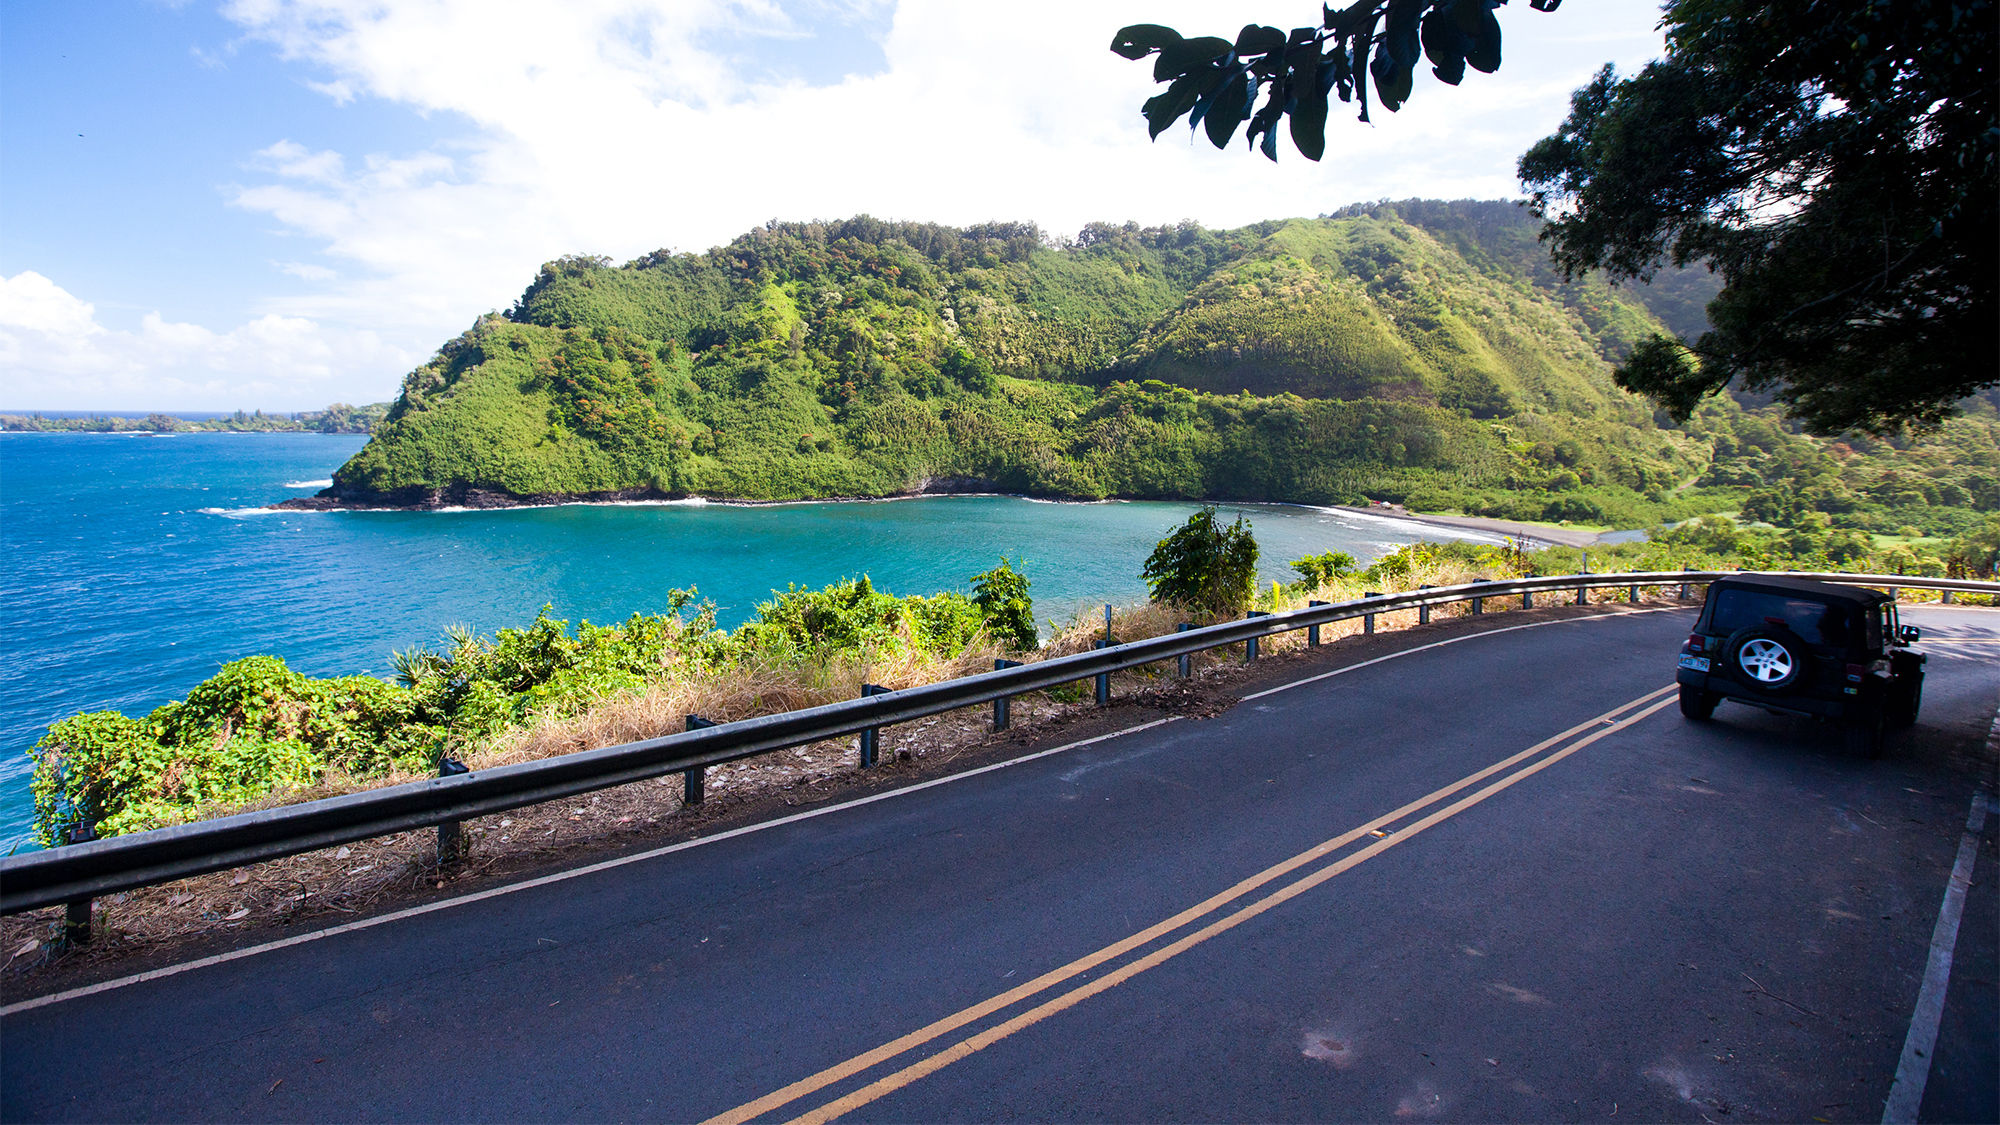 The scenic Road to Hana in Maui. The island offers a happy medium between urban Oahu and rural Kauai.